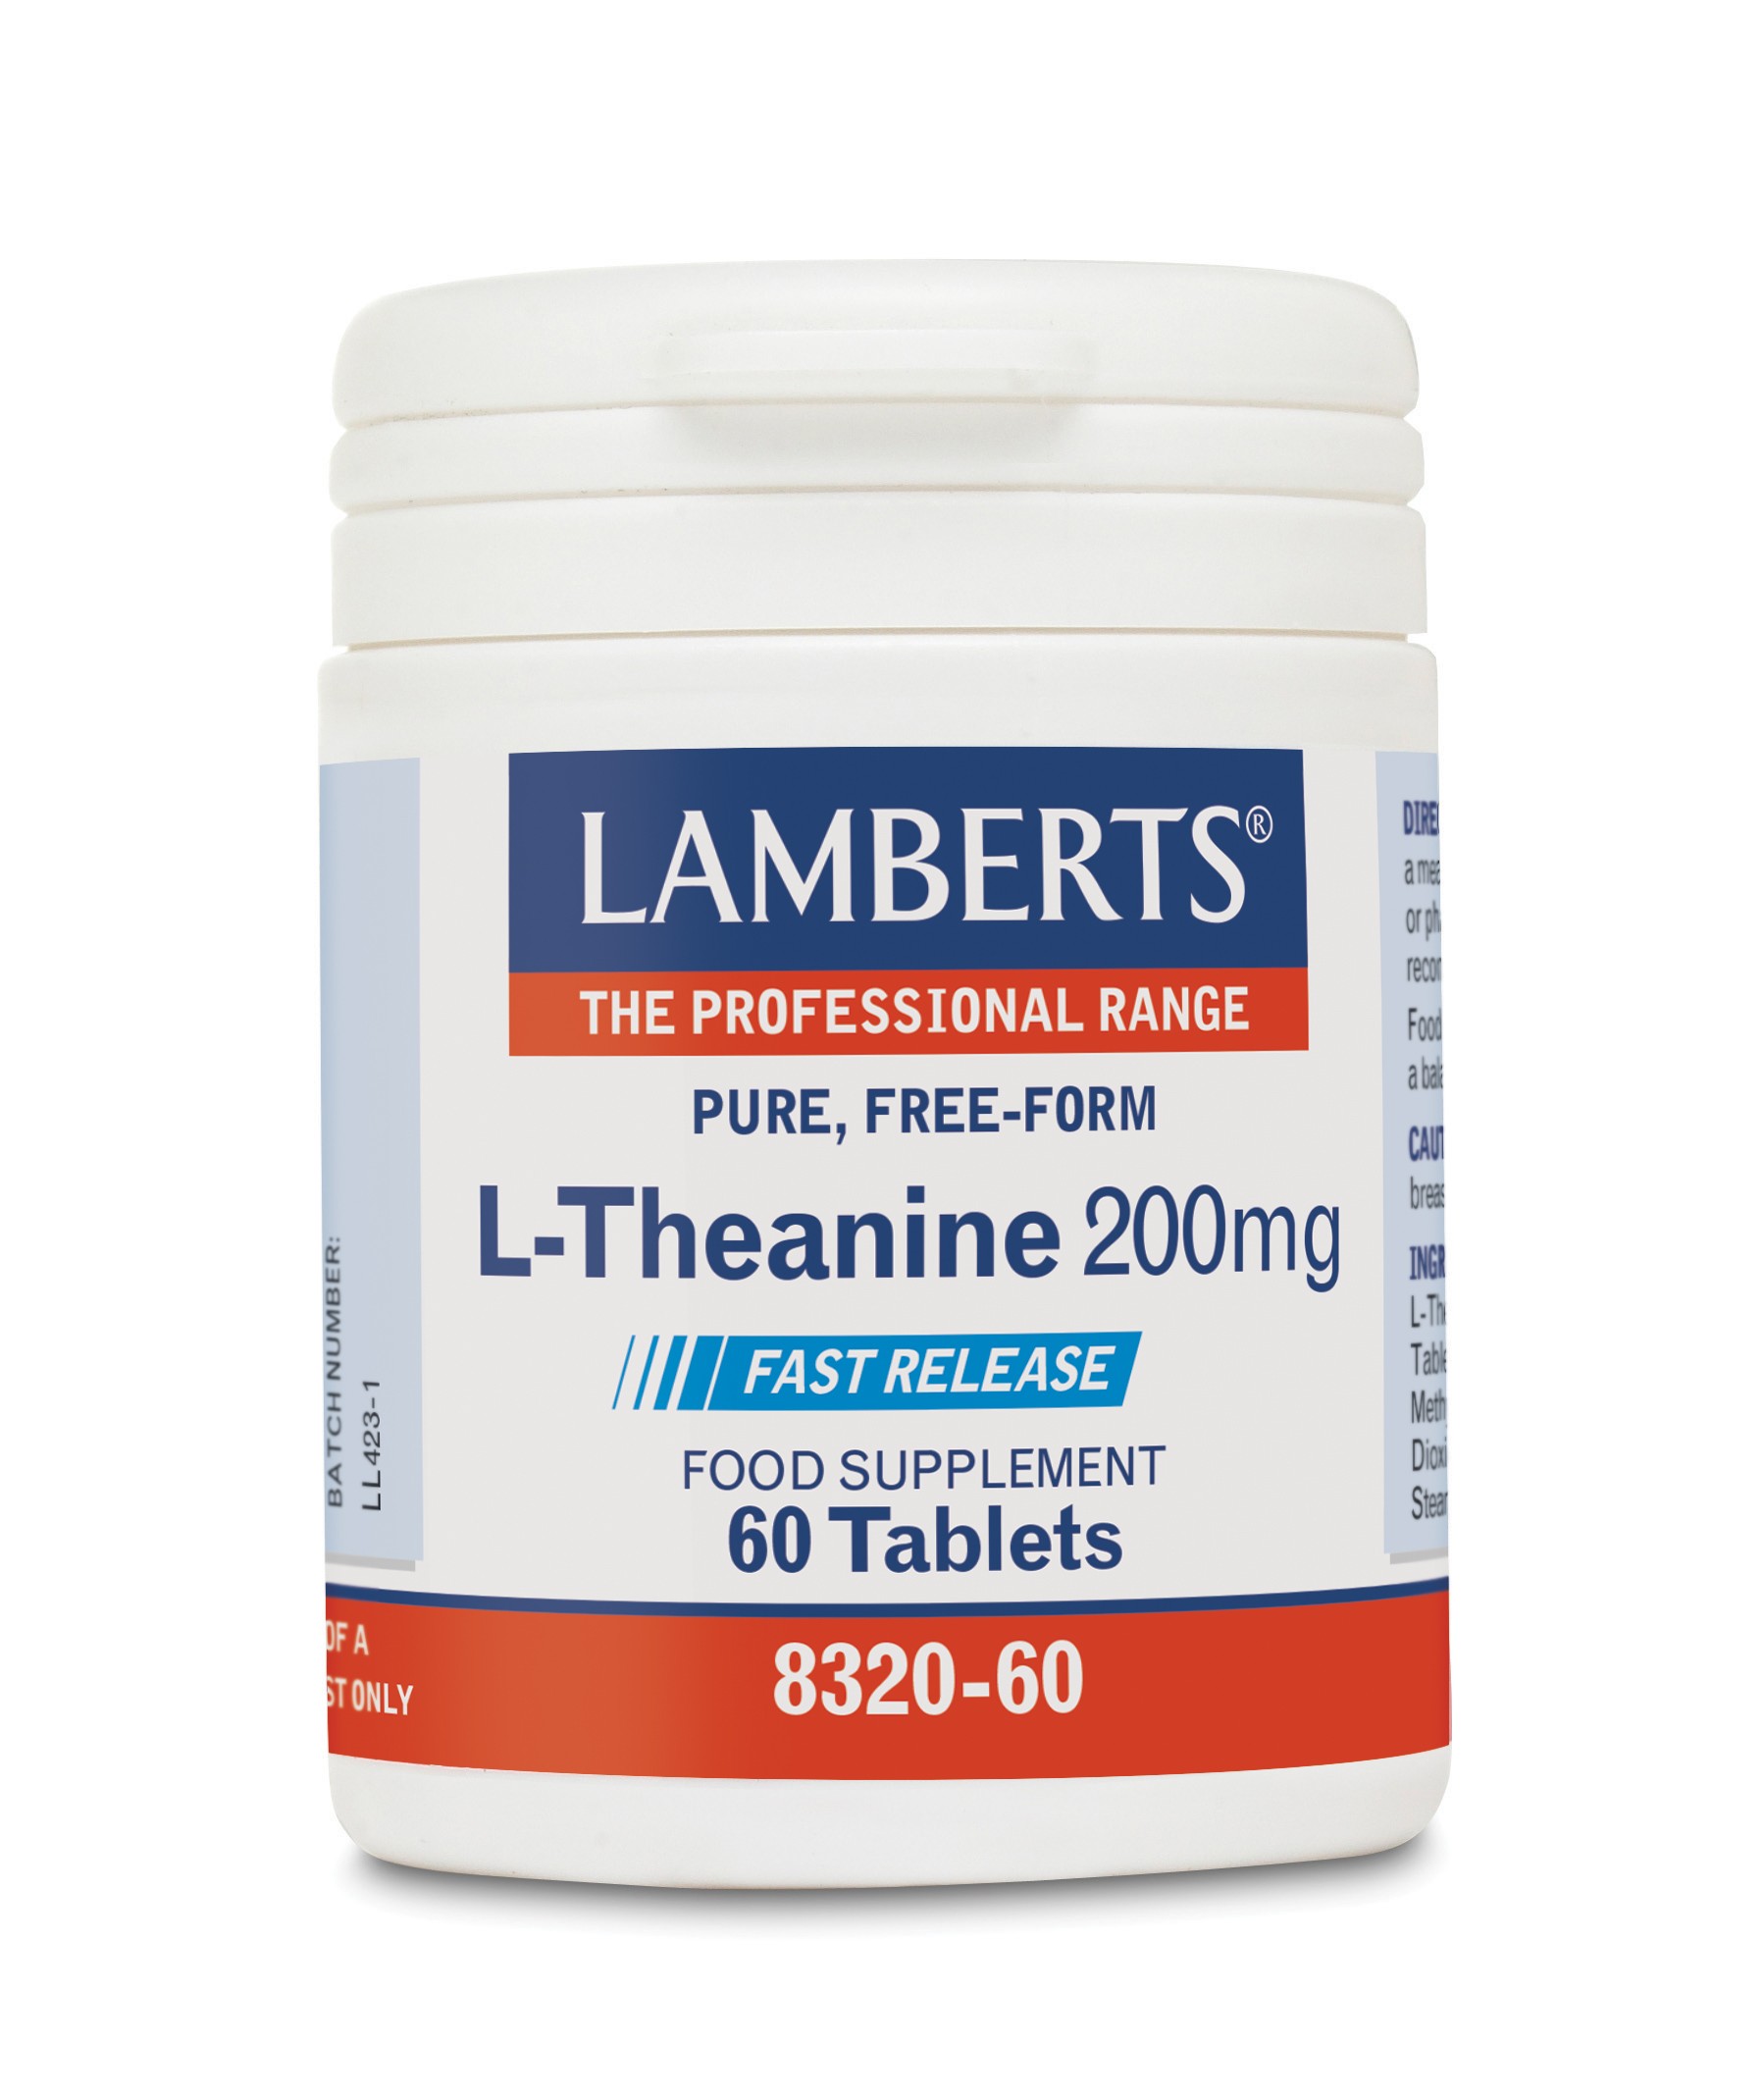 Lamberts L-Theanine 200mg